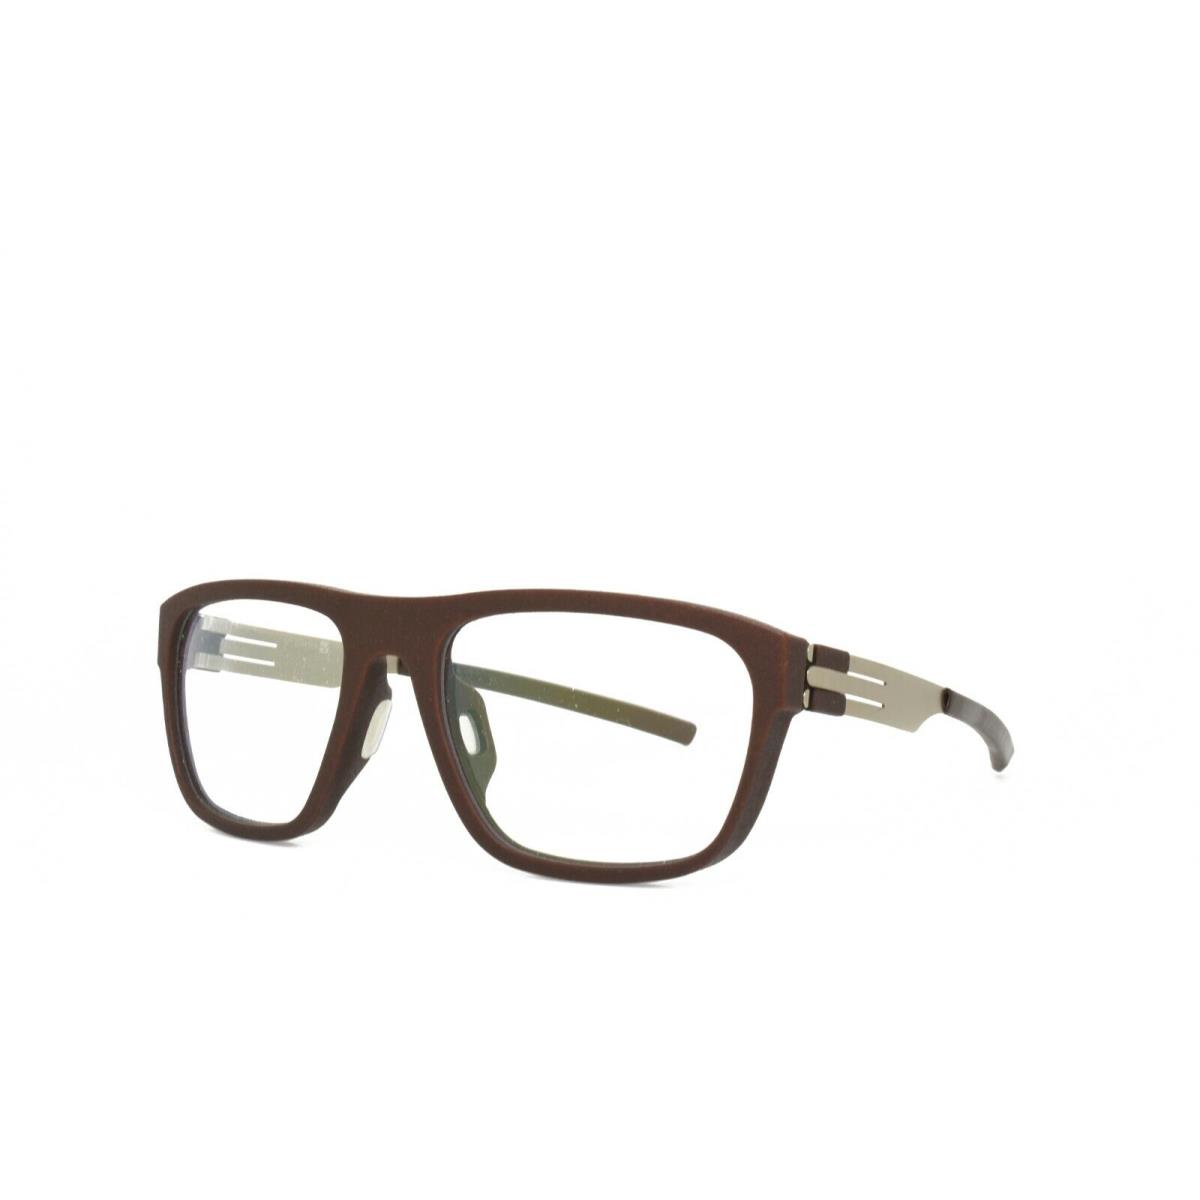 iC Berlin Eyeglasses Martin S. Bronze Rawhide 52-21-145